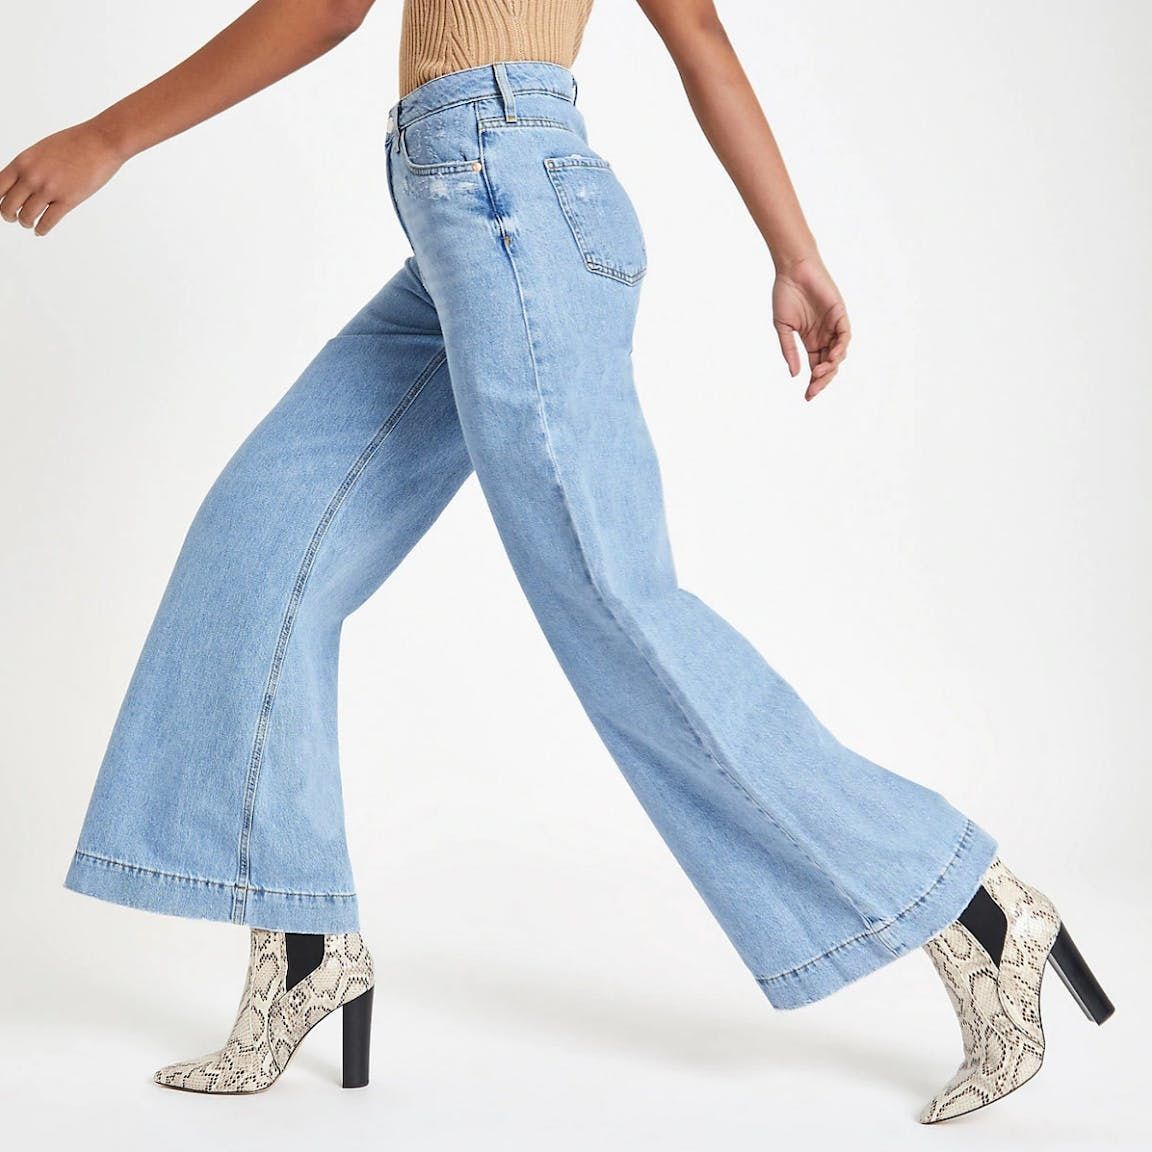 ladies jeans long leg